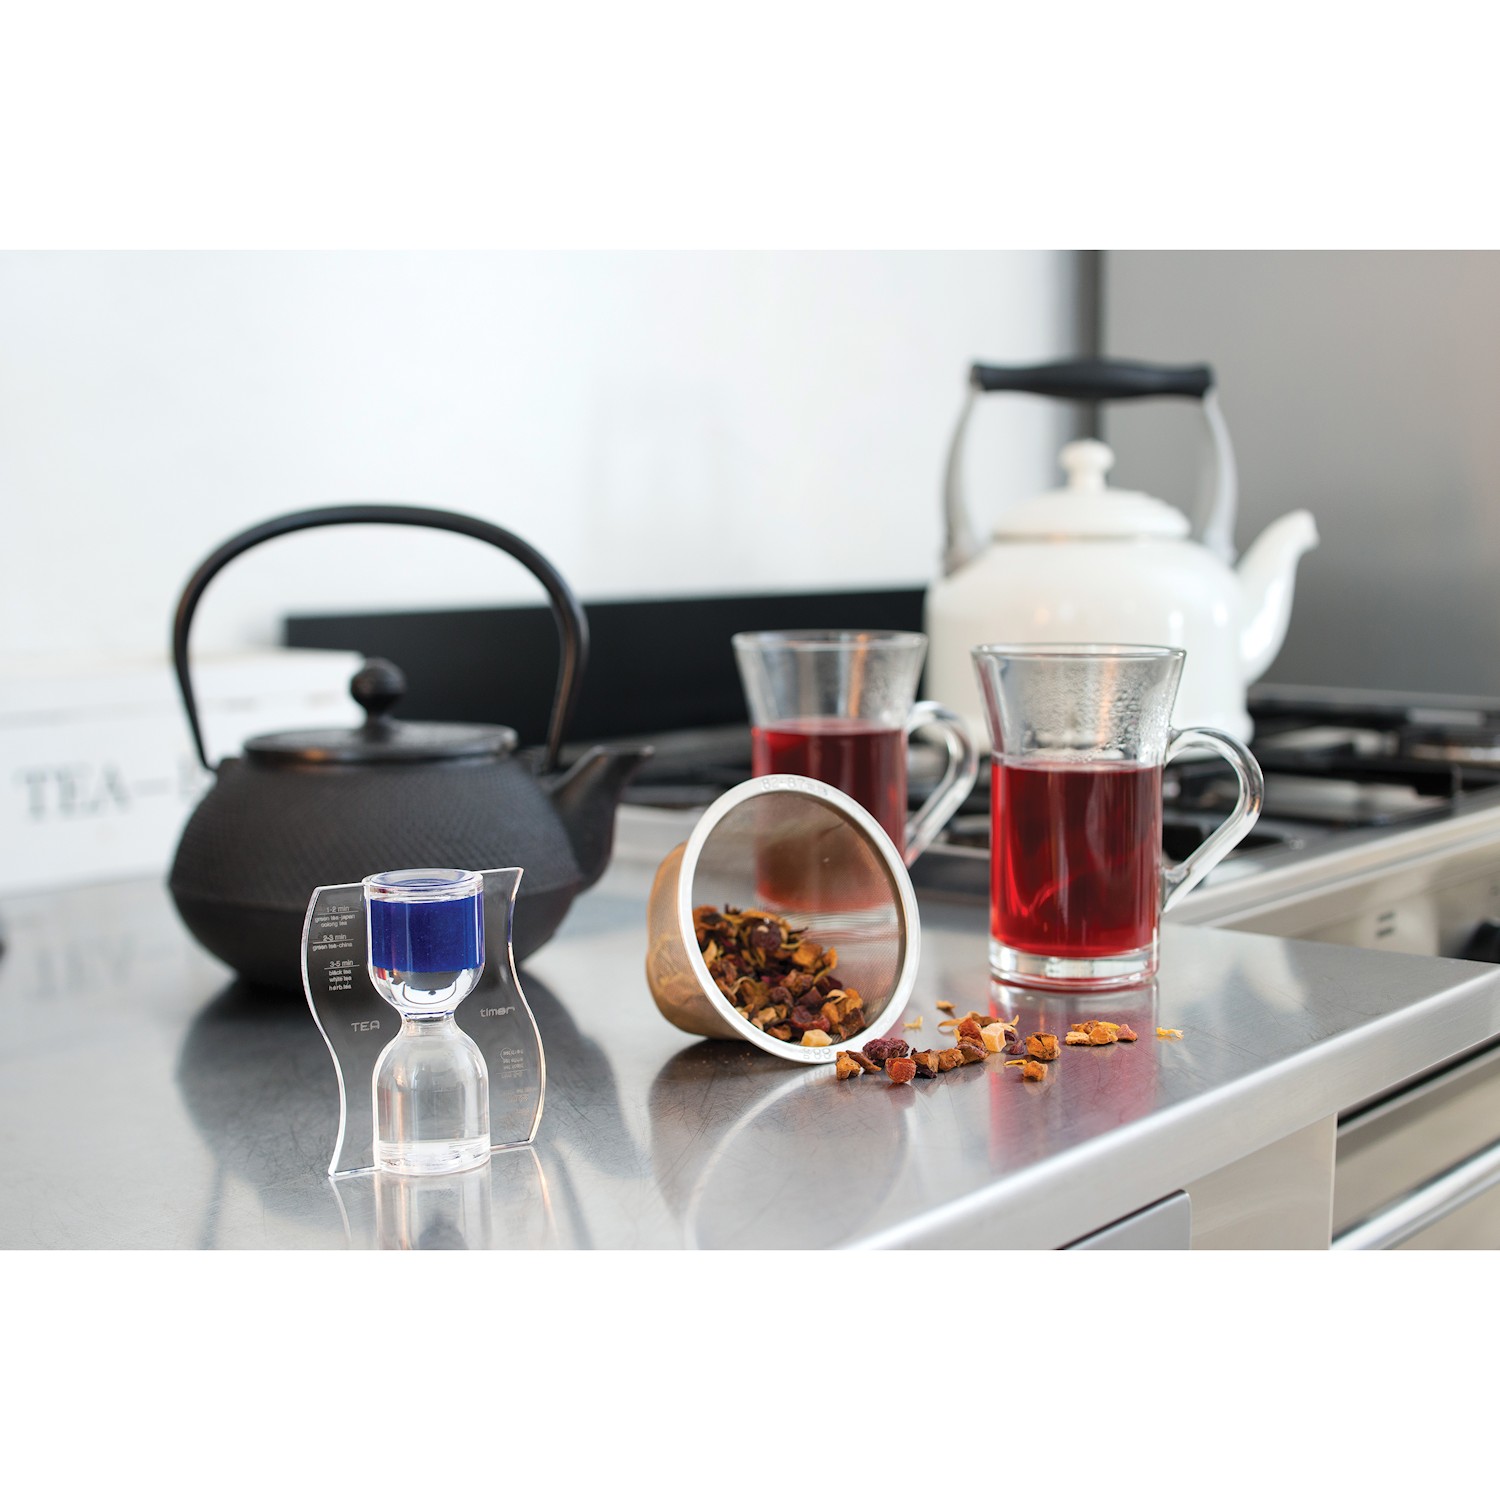 Paradox Anti-Gravity Hourglass Tea Timer - Sand Runs Upwards | eBay